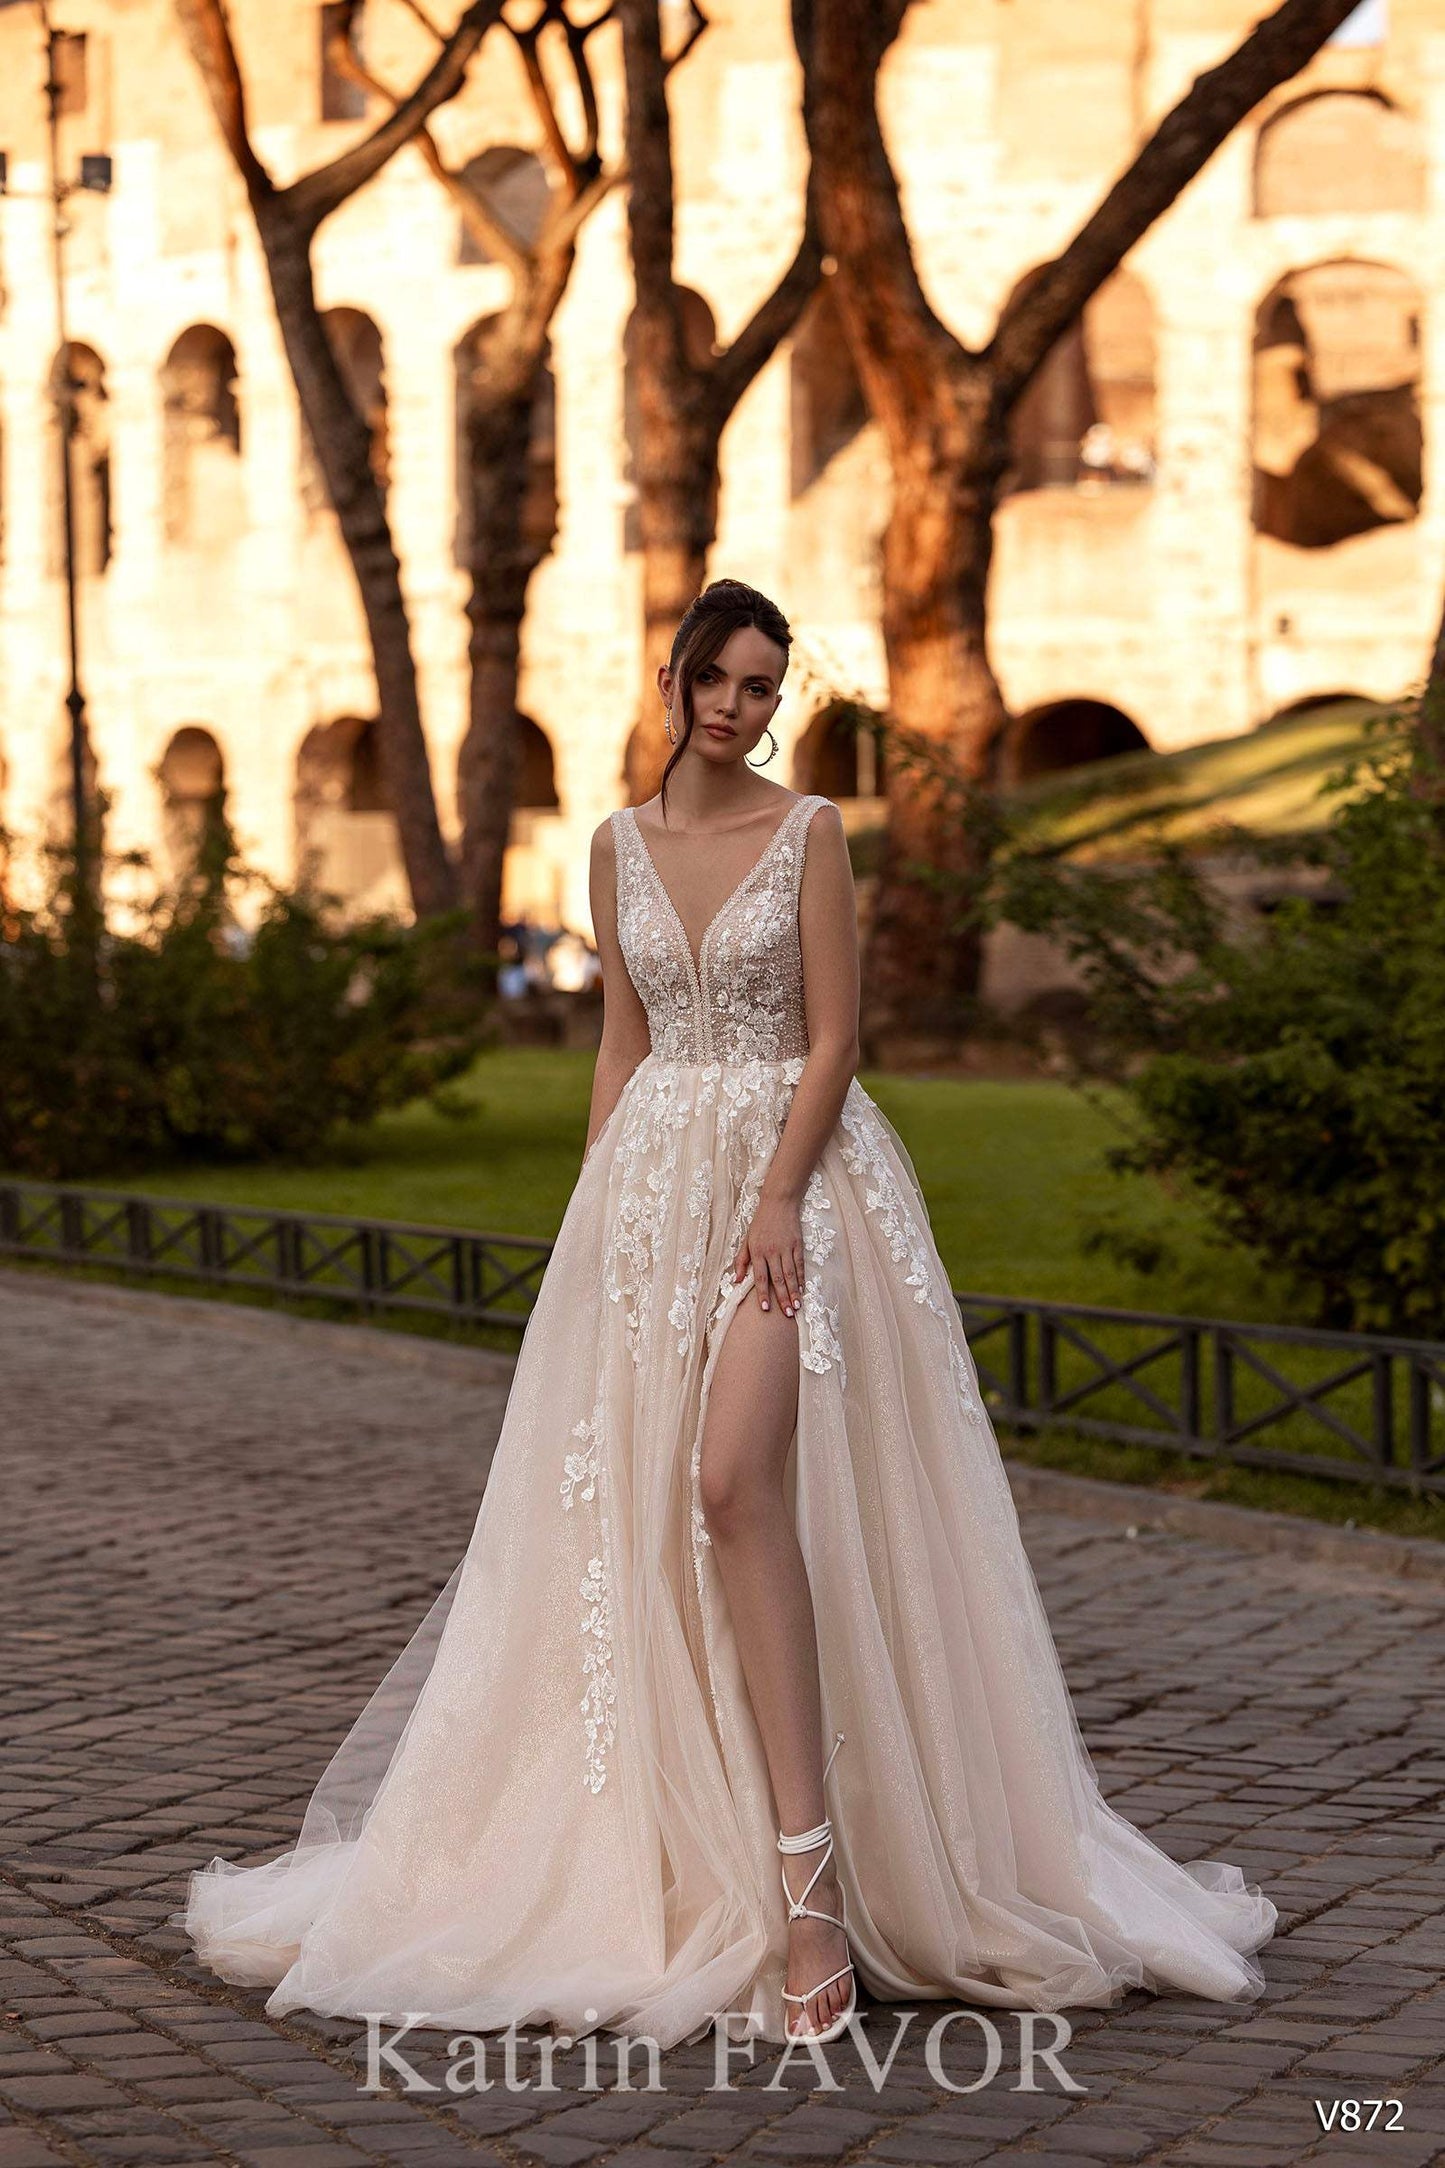 KatrinFAVORboutique-Beach style wedding dress Blushing bride Sparkly wedding gown